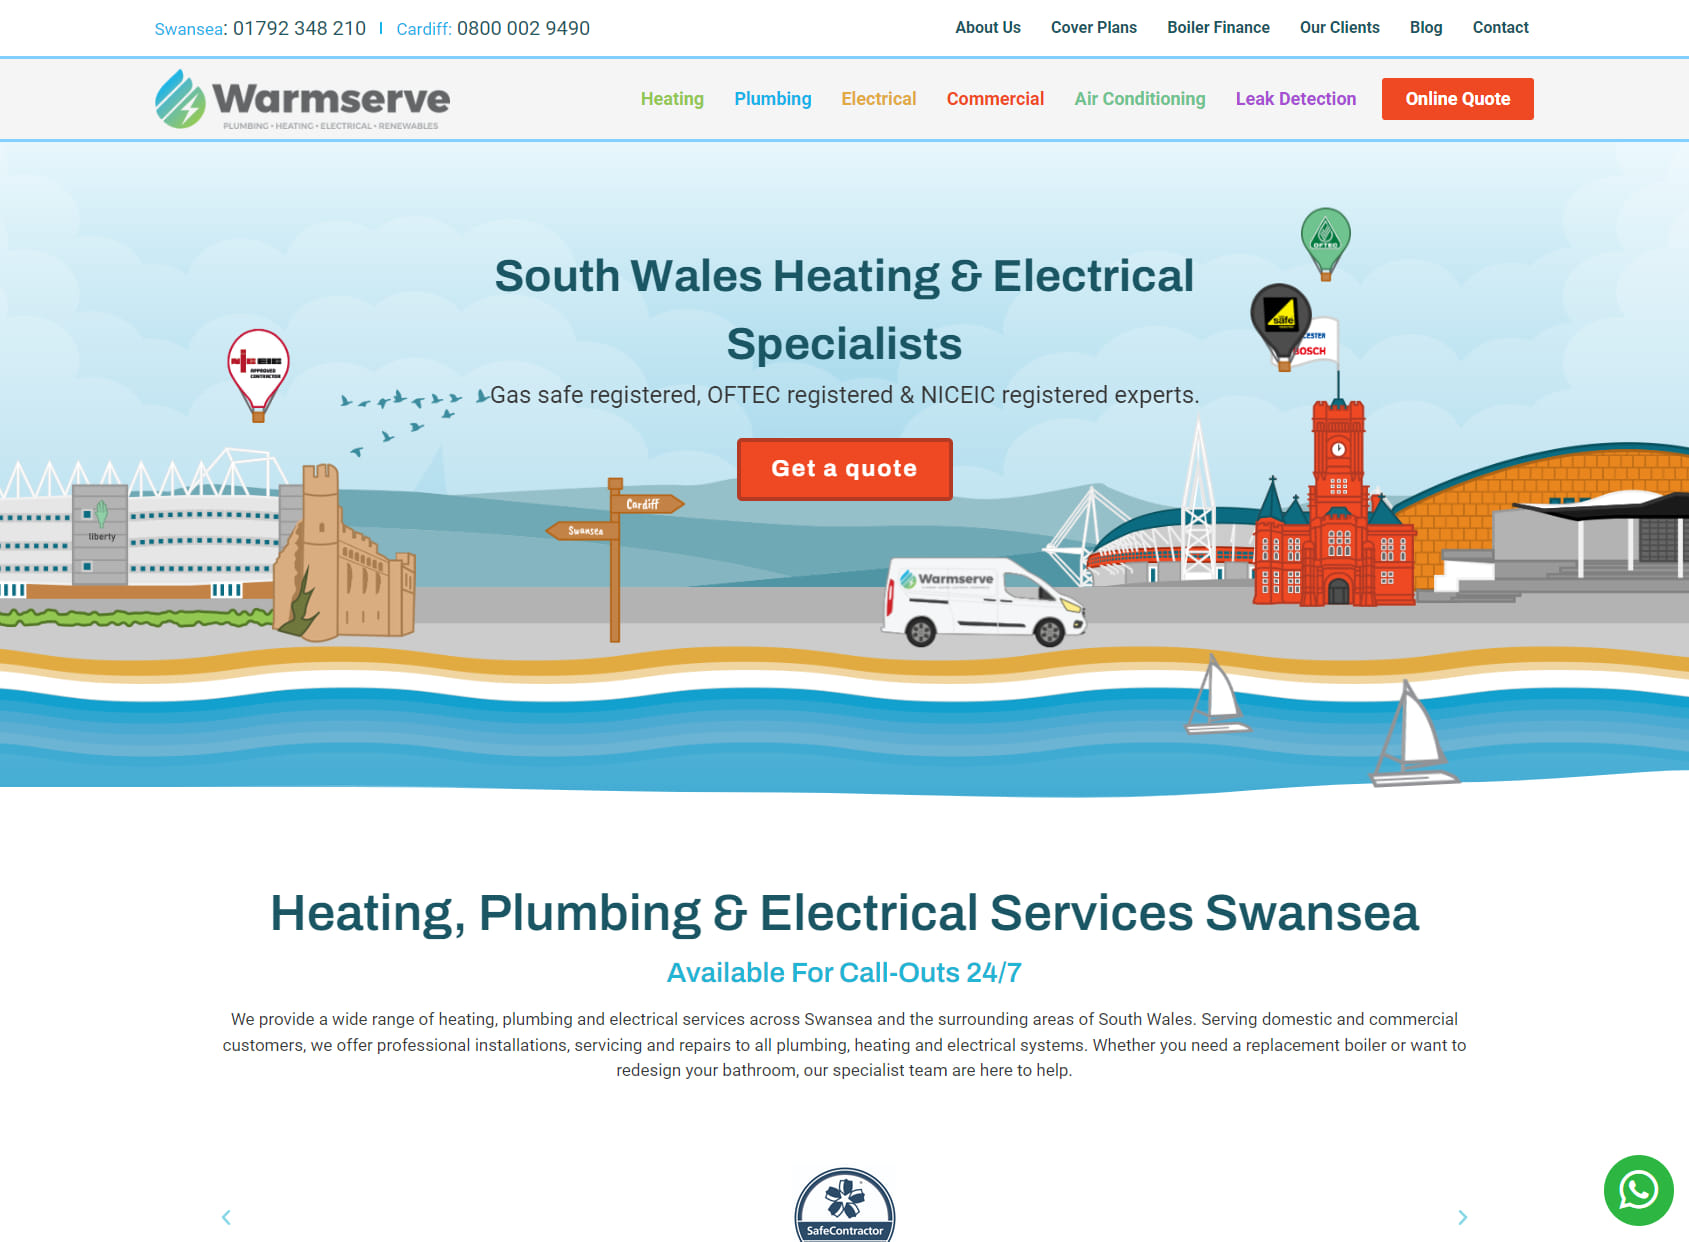 Warmserve Services Ltd